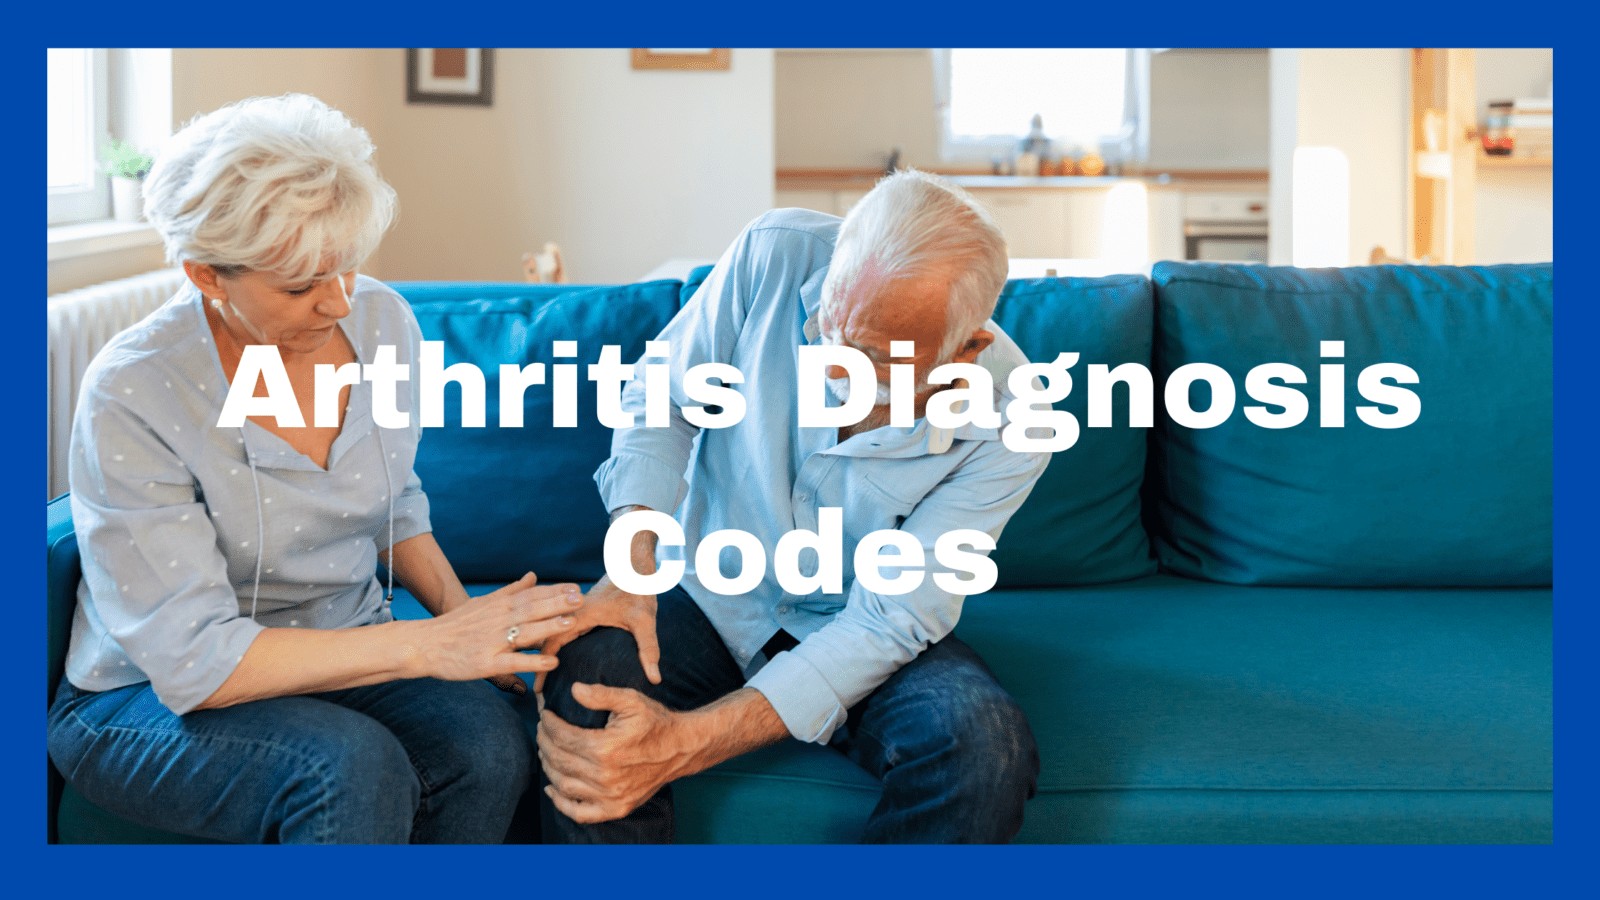 ICD 10 code for arthritis